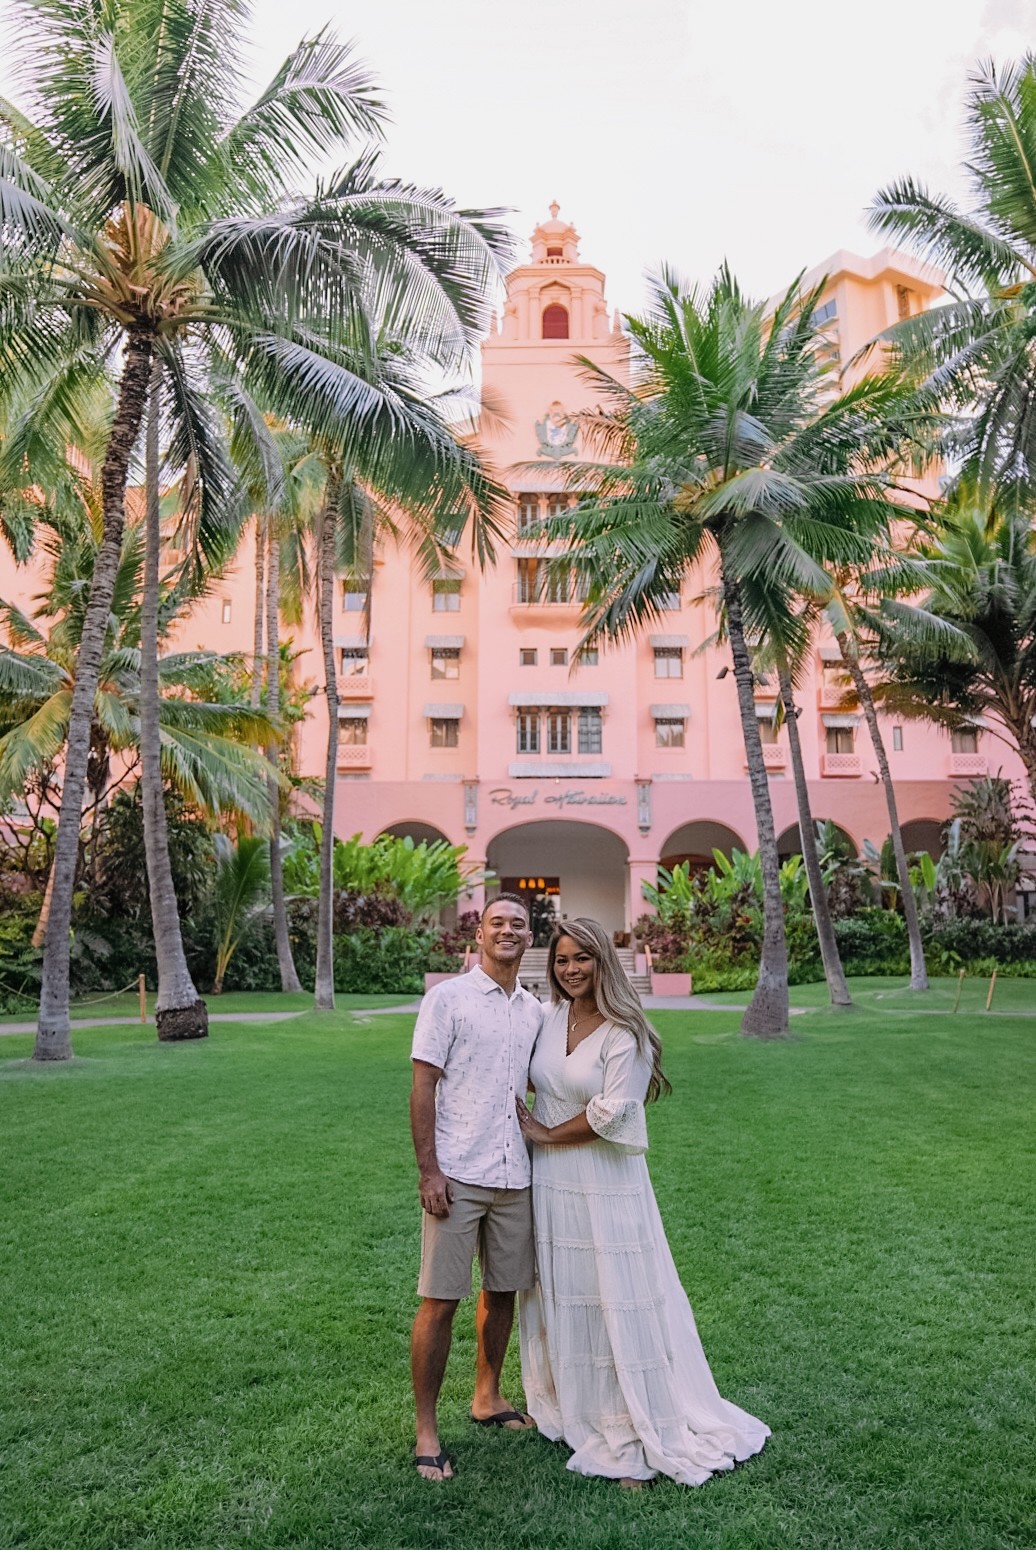 The Royal Hawaiian Resort Waikiki (Pink Palace) - best place to stay waikiki, best place to stay oahu, best place to stay hawaii, best hotel waikiki, best hotel hawaii, best hotel oahu, pink hotel, where to stay in hawaii, where to stay waikiki, hawaii travel, oahu travel, hawaii, waikiki, oahu, hawaii blog, oahu blog, hawaii blogger